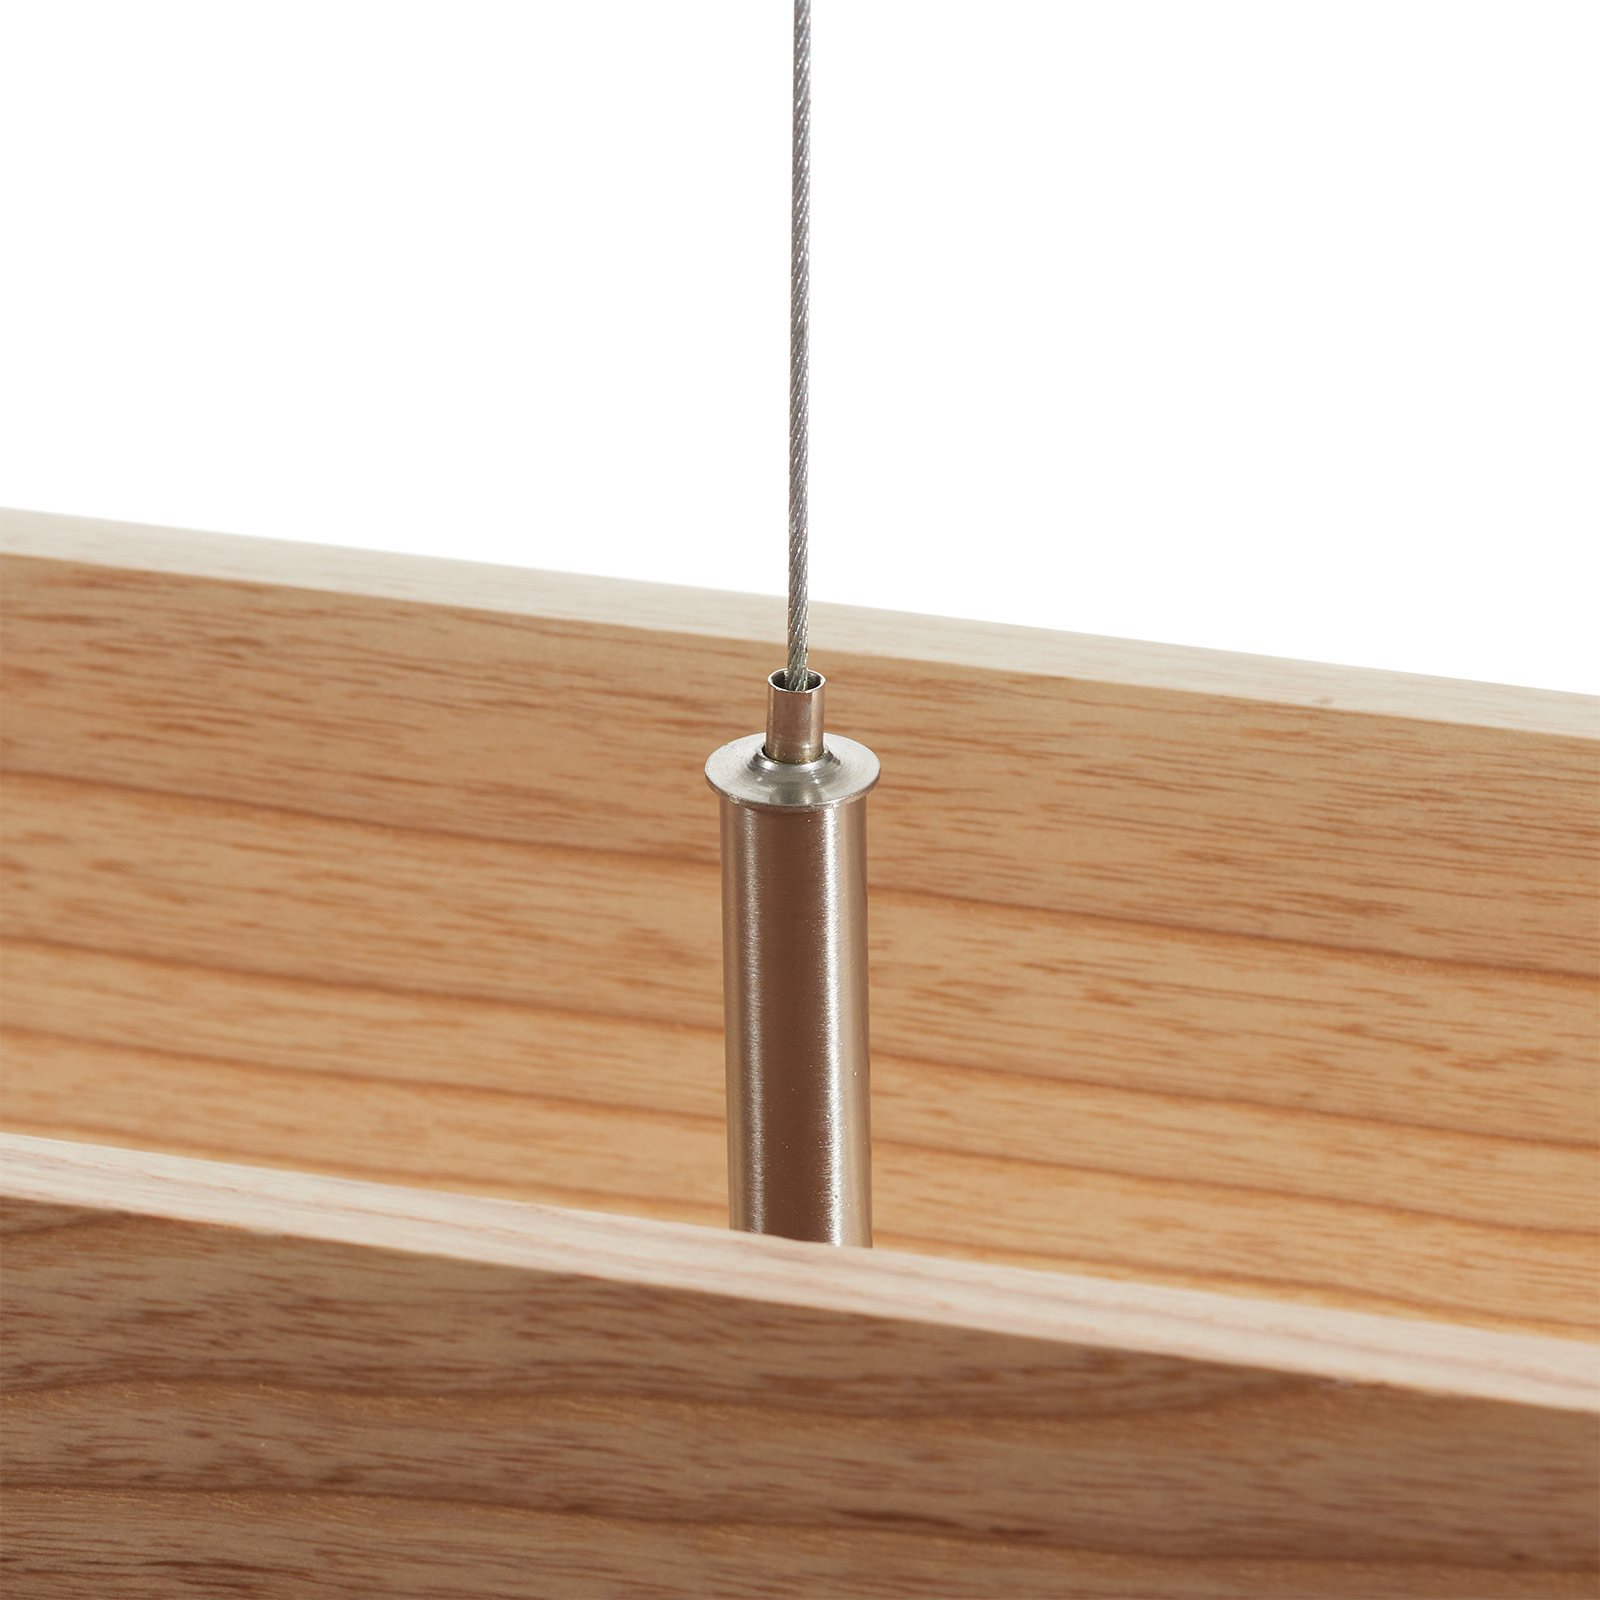 LED hanglamp Ash met kap van licht hout